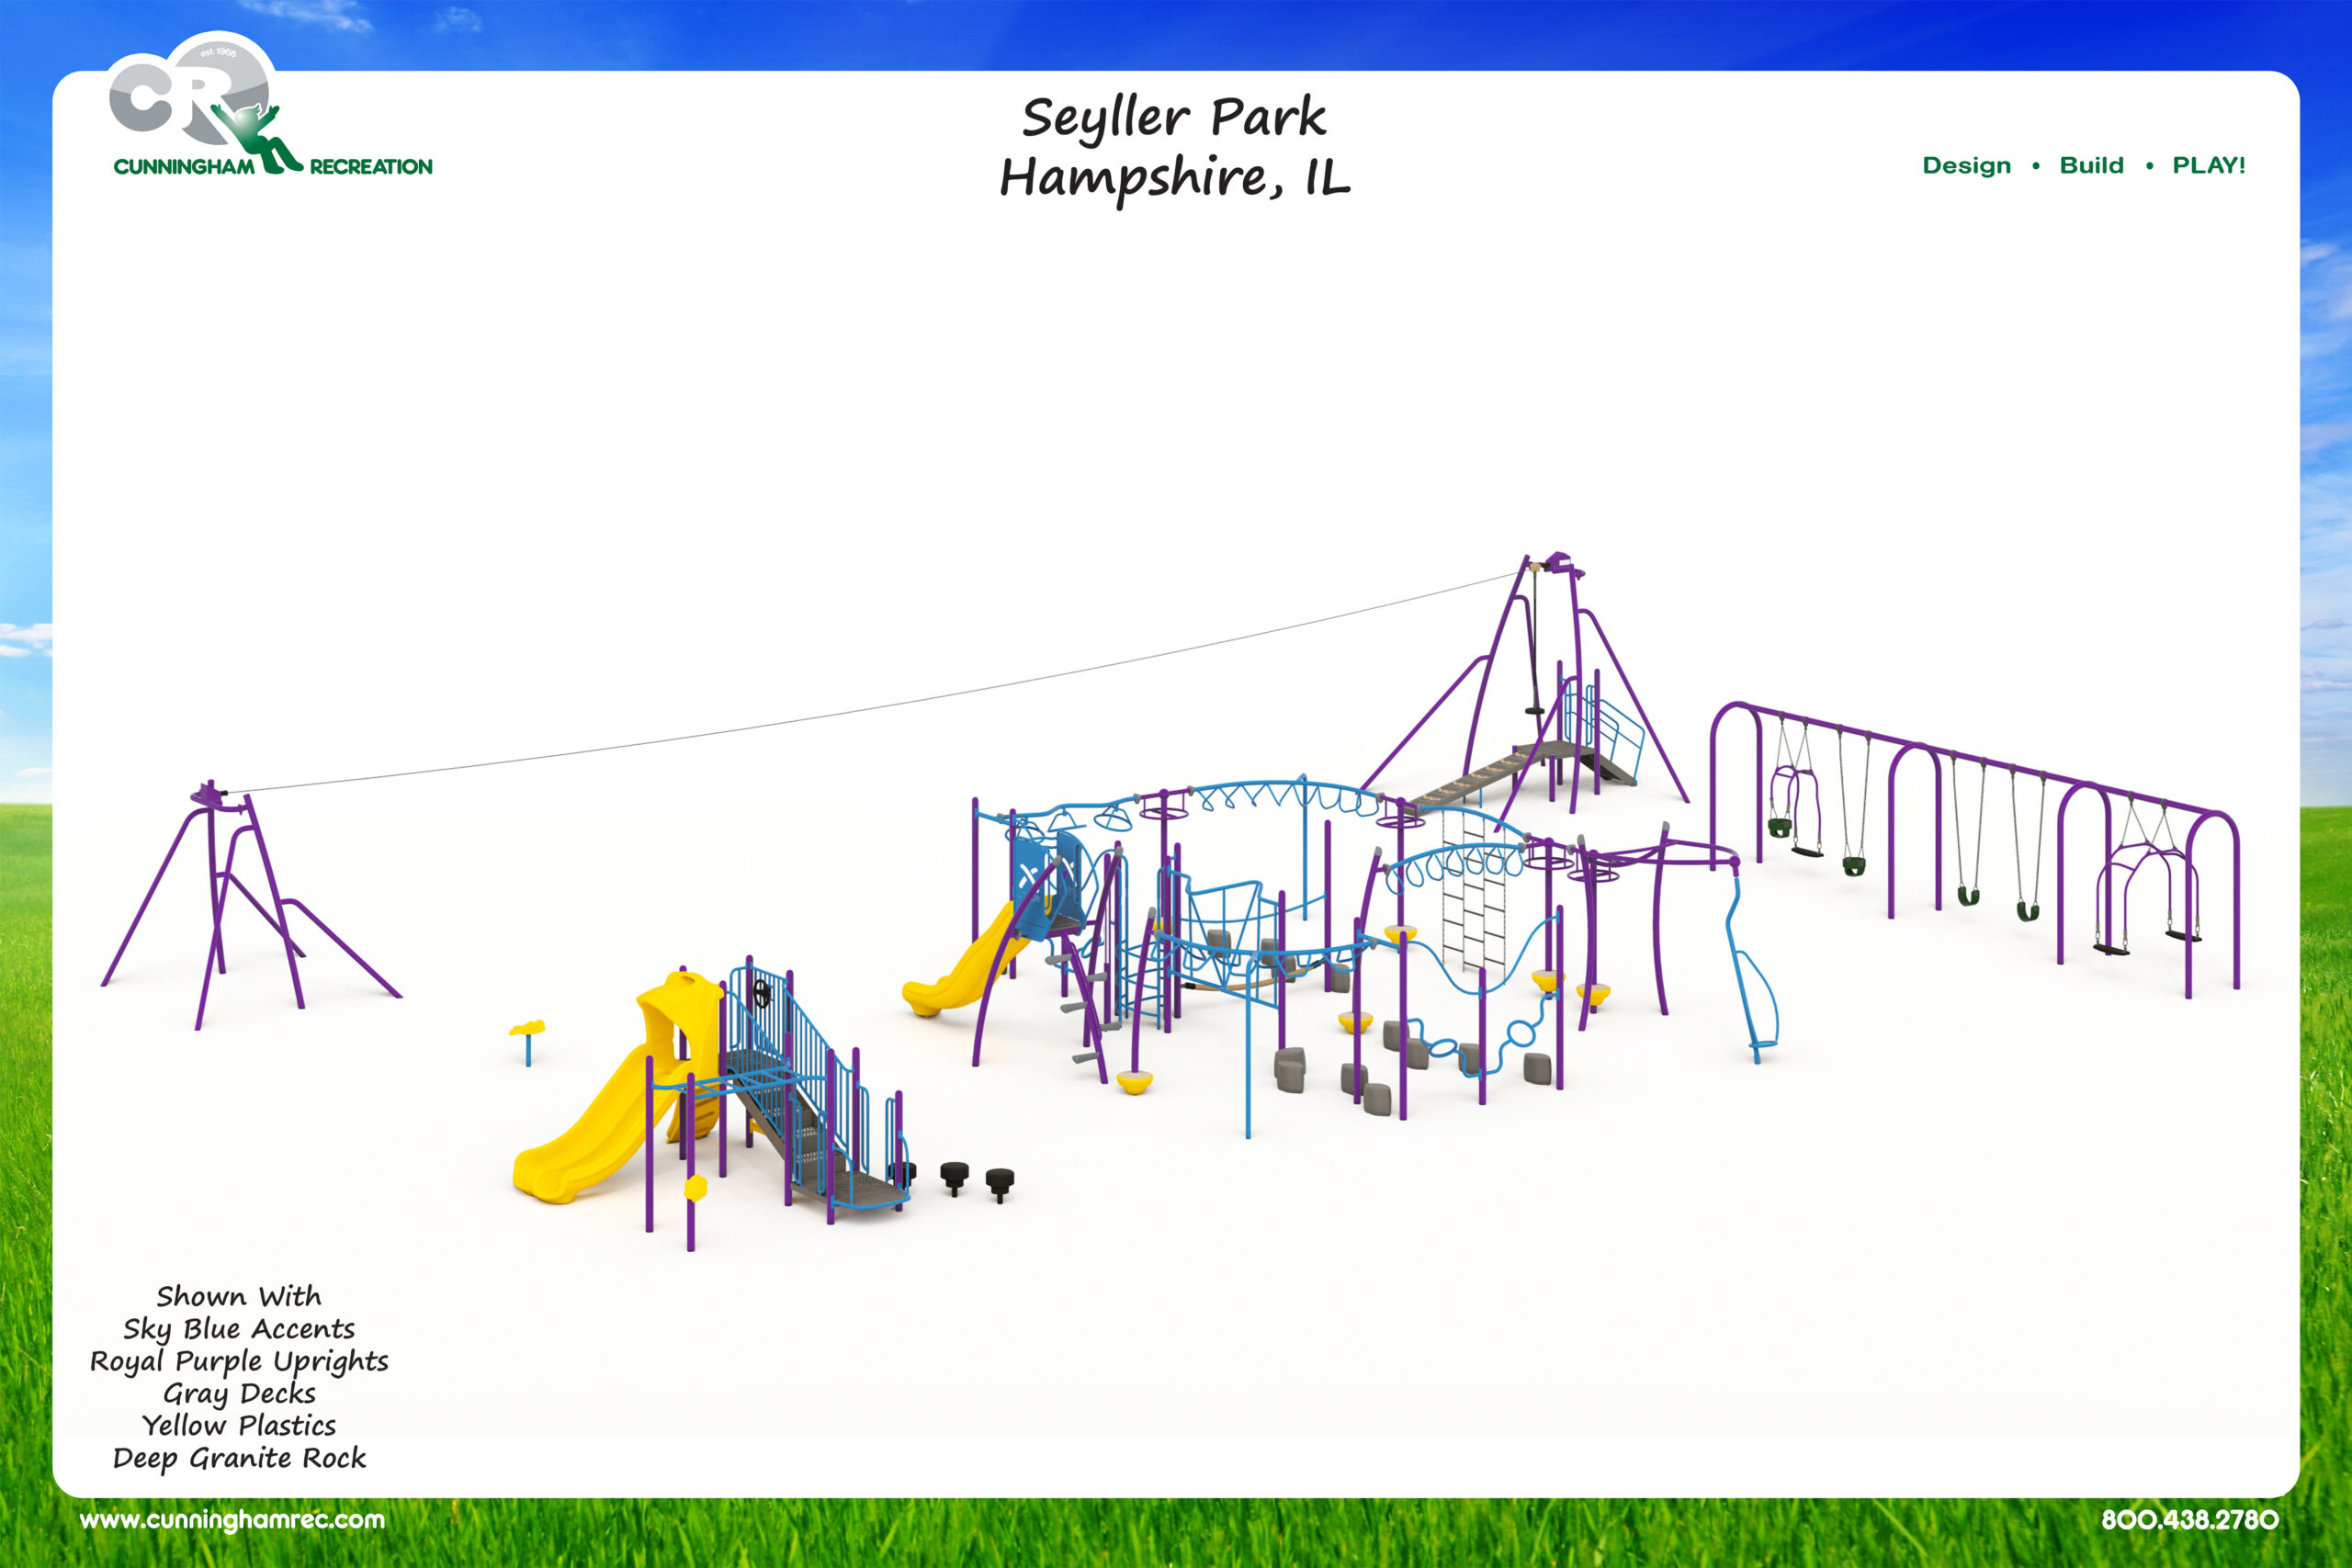 Seyller Park Playground